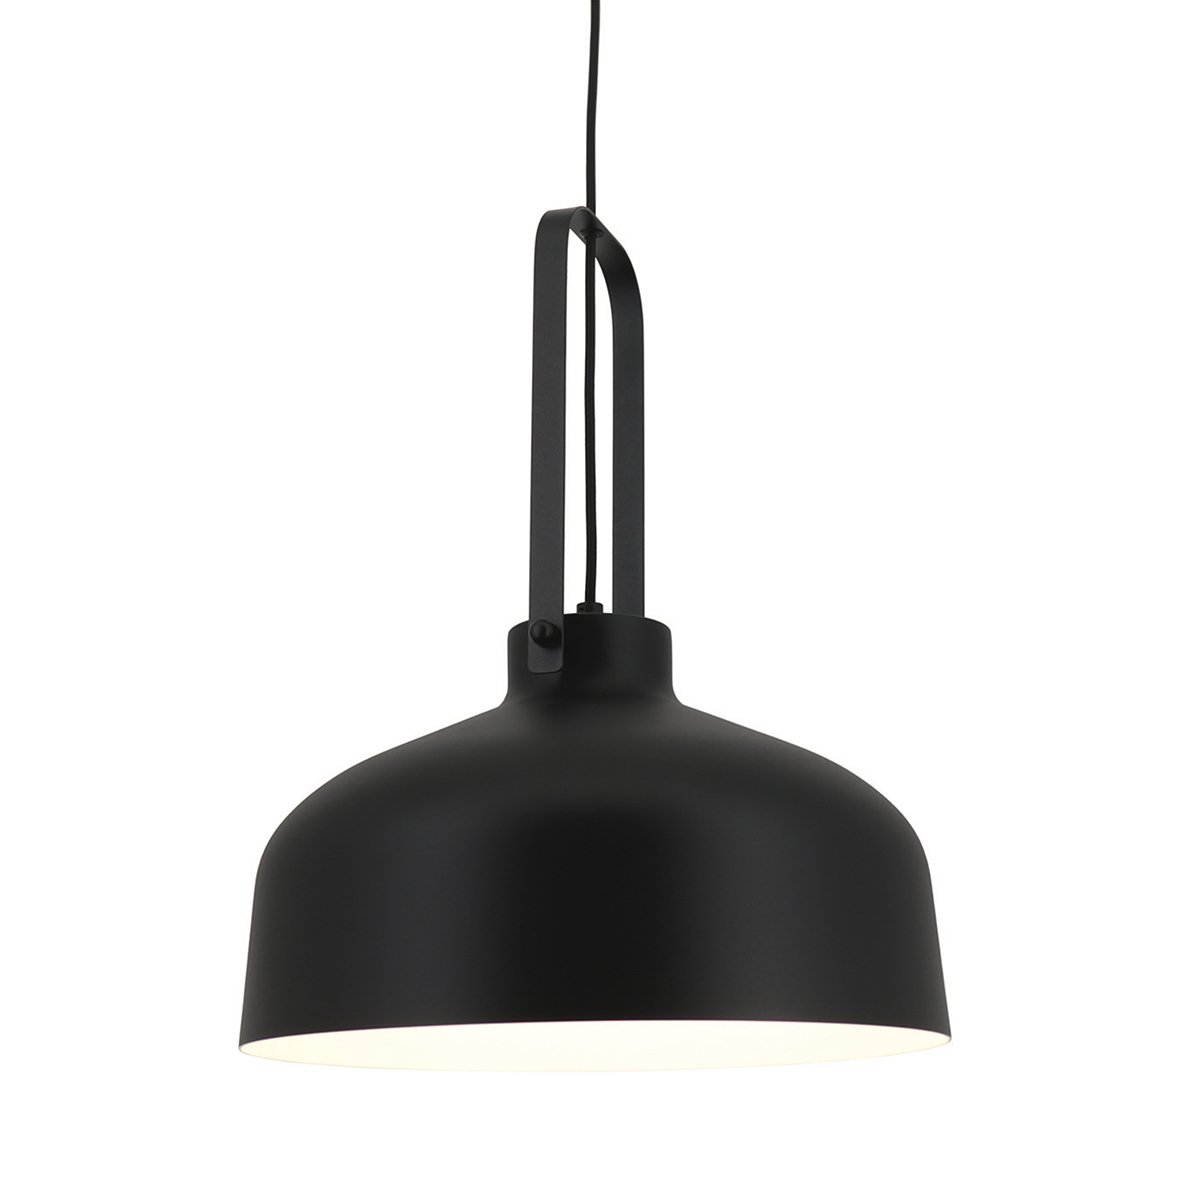 Fabrik lampe industriell schwarz Vaglia - Ø 37.5 cm